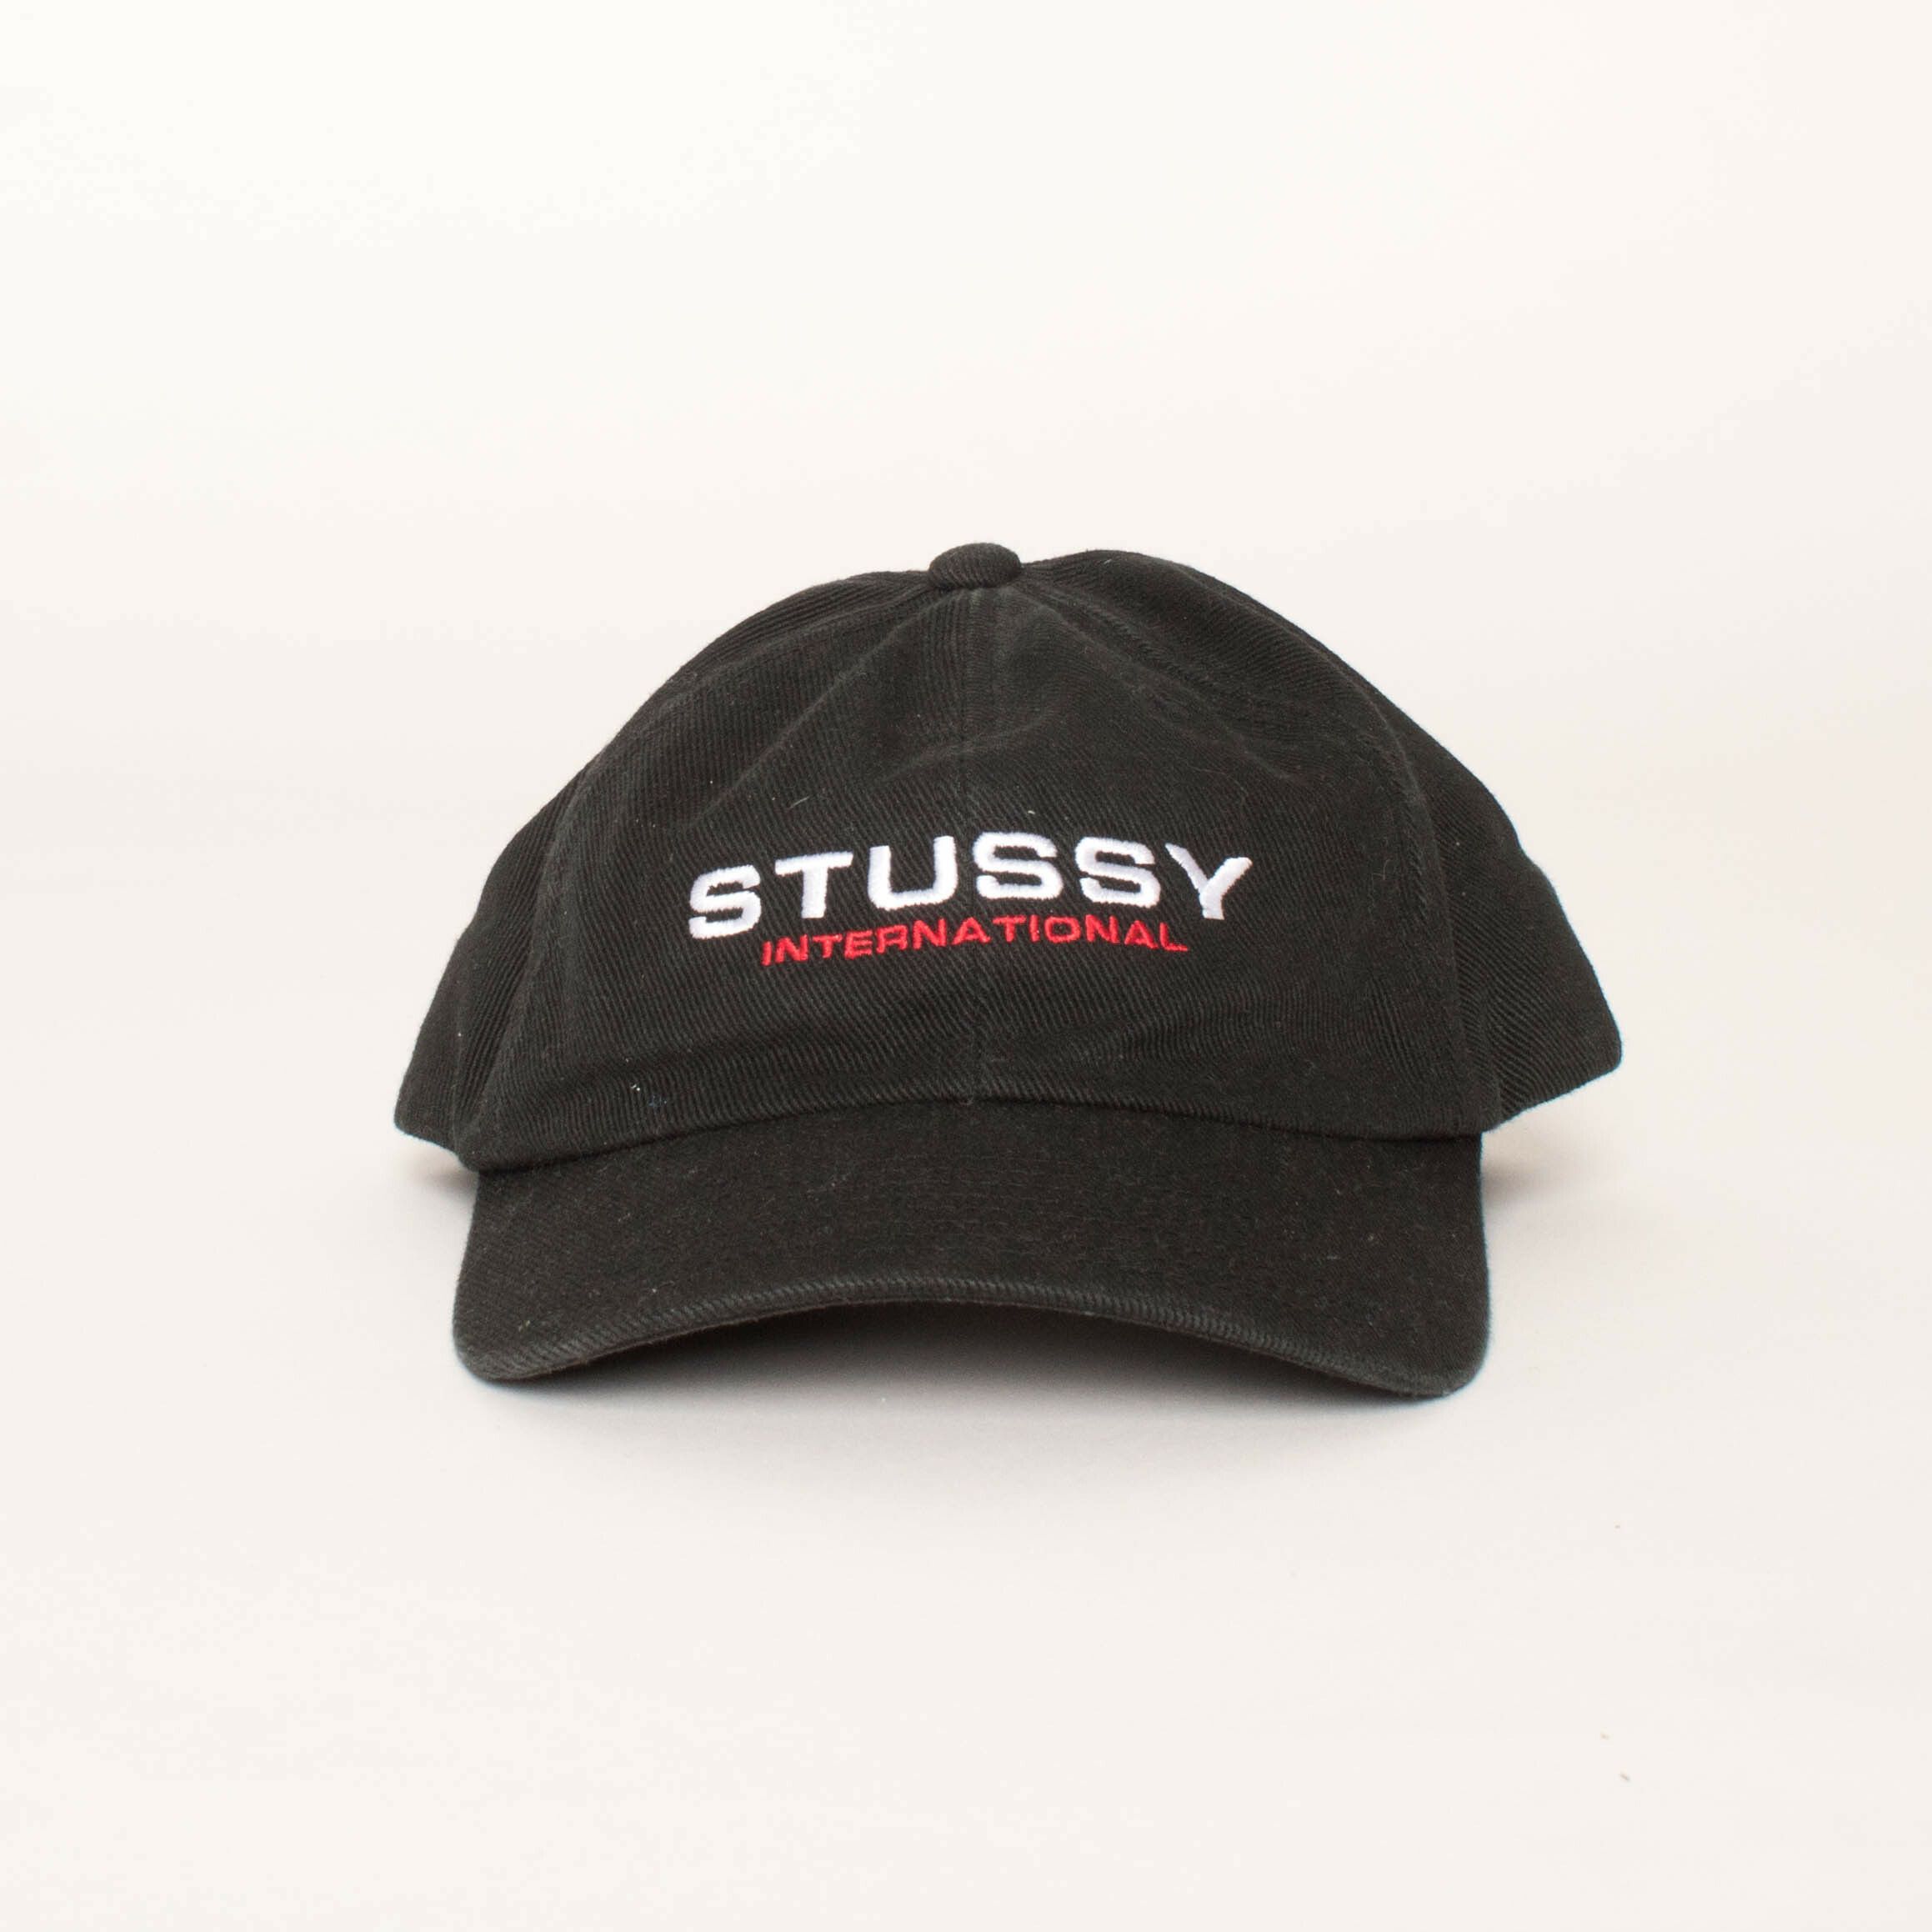 Stussy International Strapback Hat in Black by YehMe2